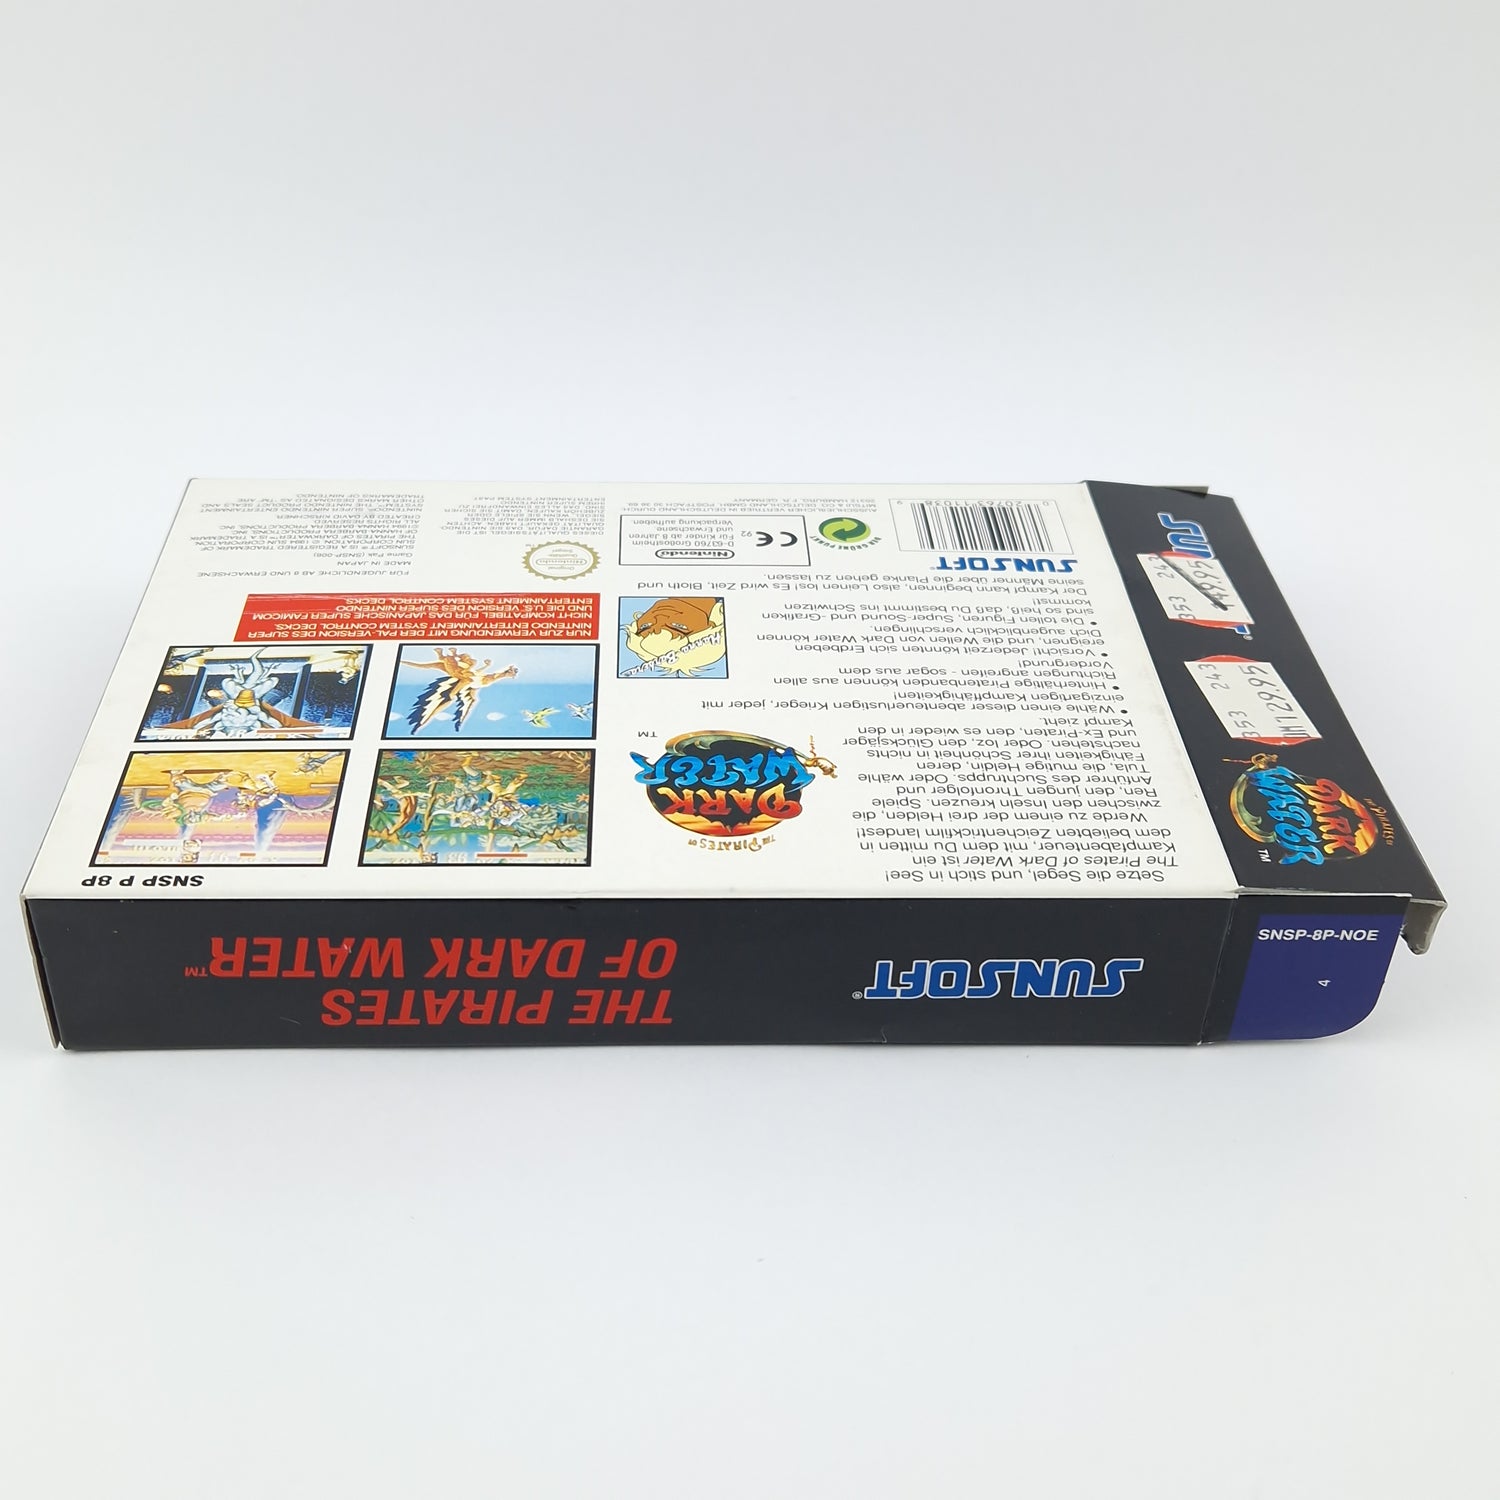 Super Nintendo Game: The Pirates of Dark Water - SNES OVP PAL / Sunsoft